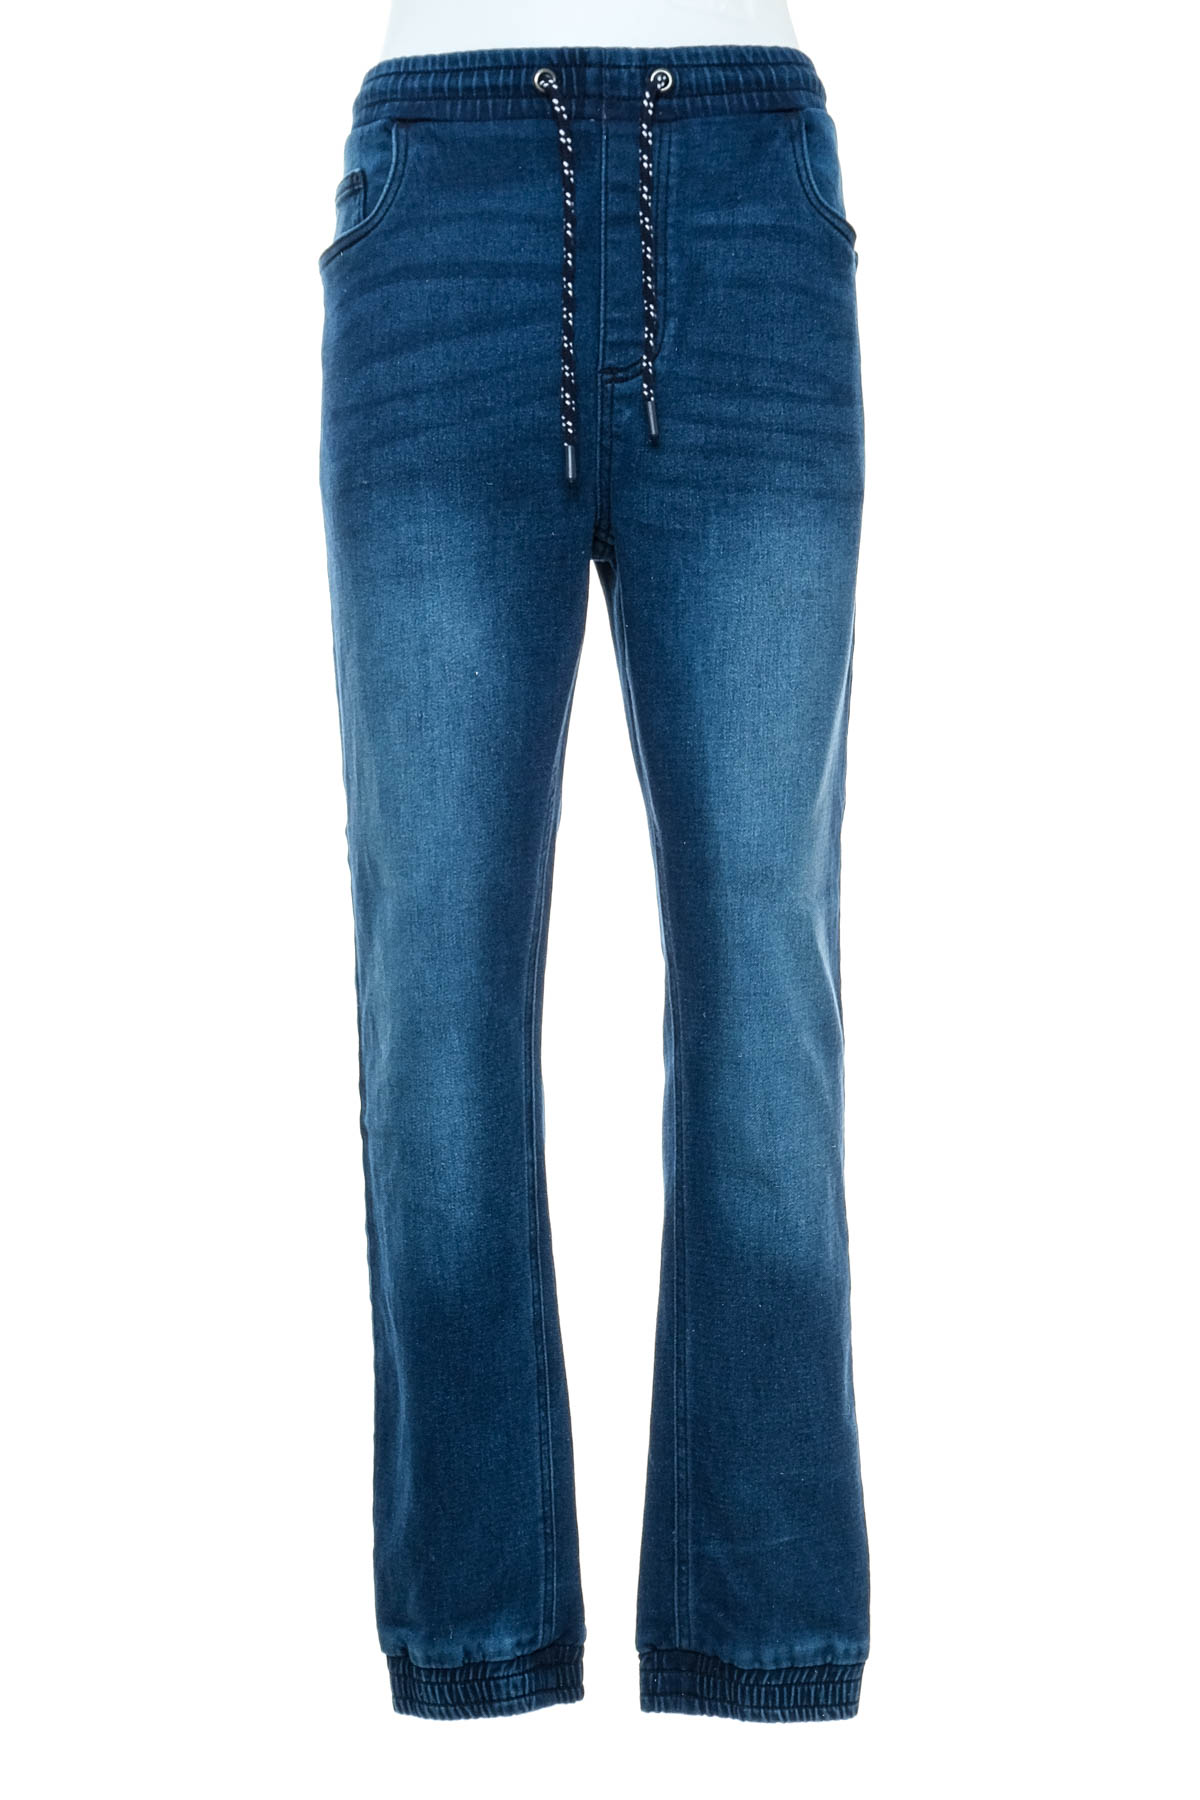 Men's jeans - LIVERGY - 0